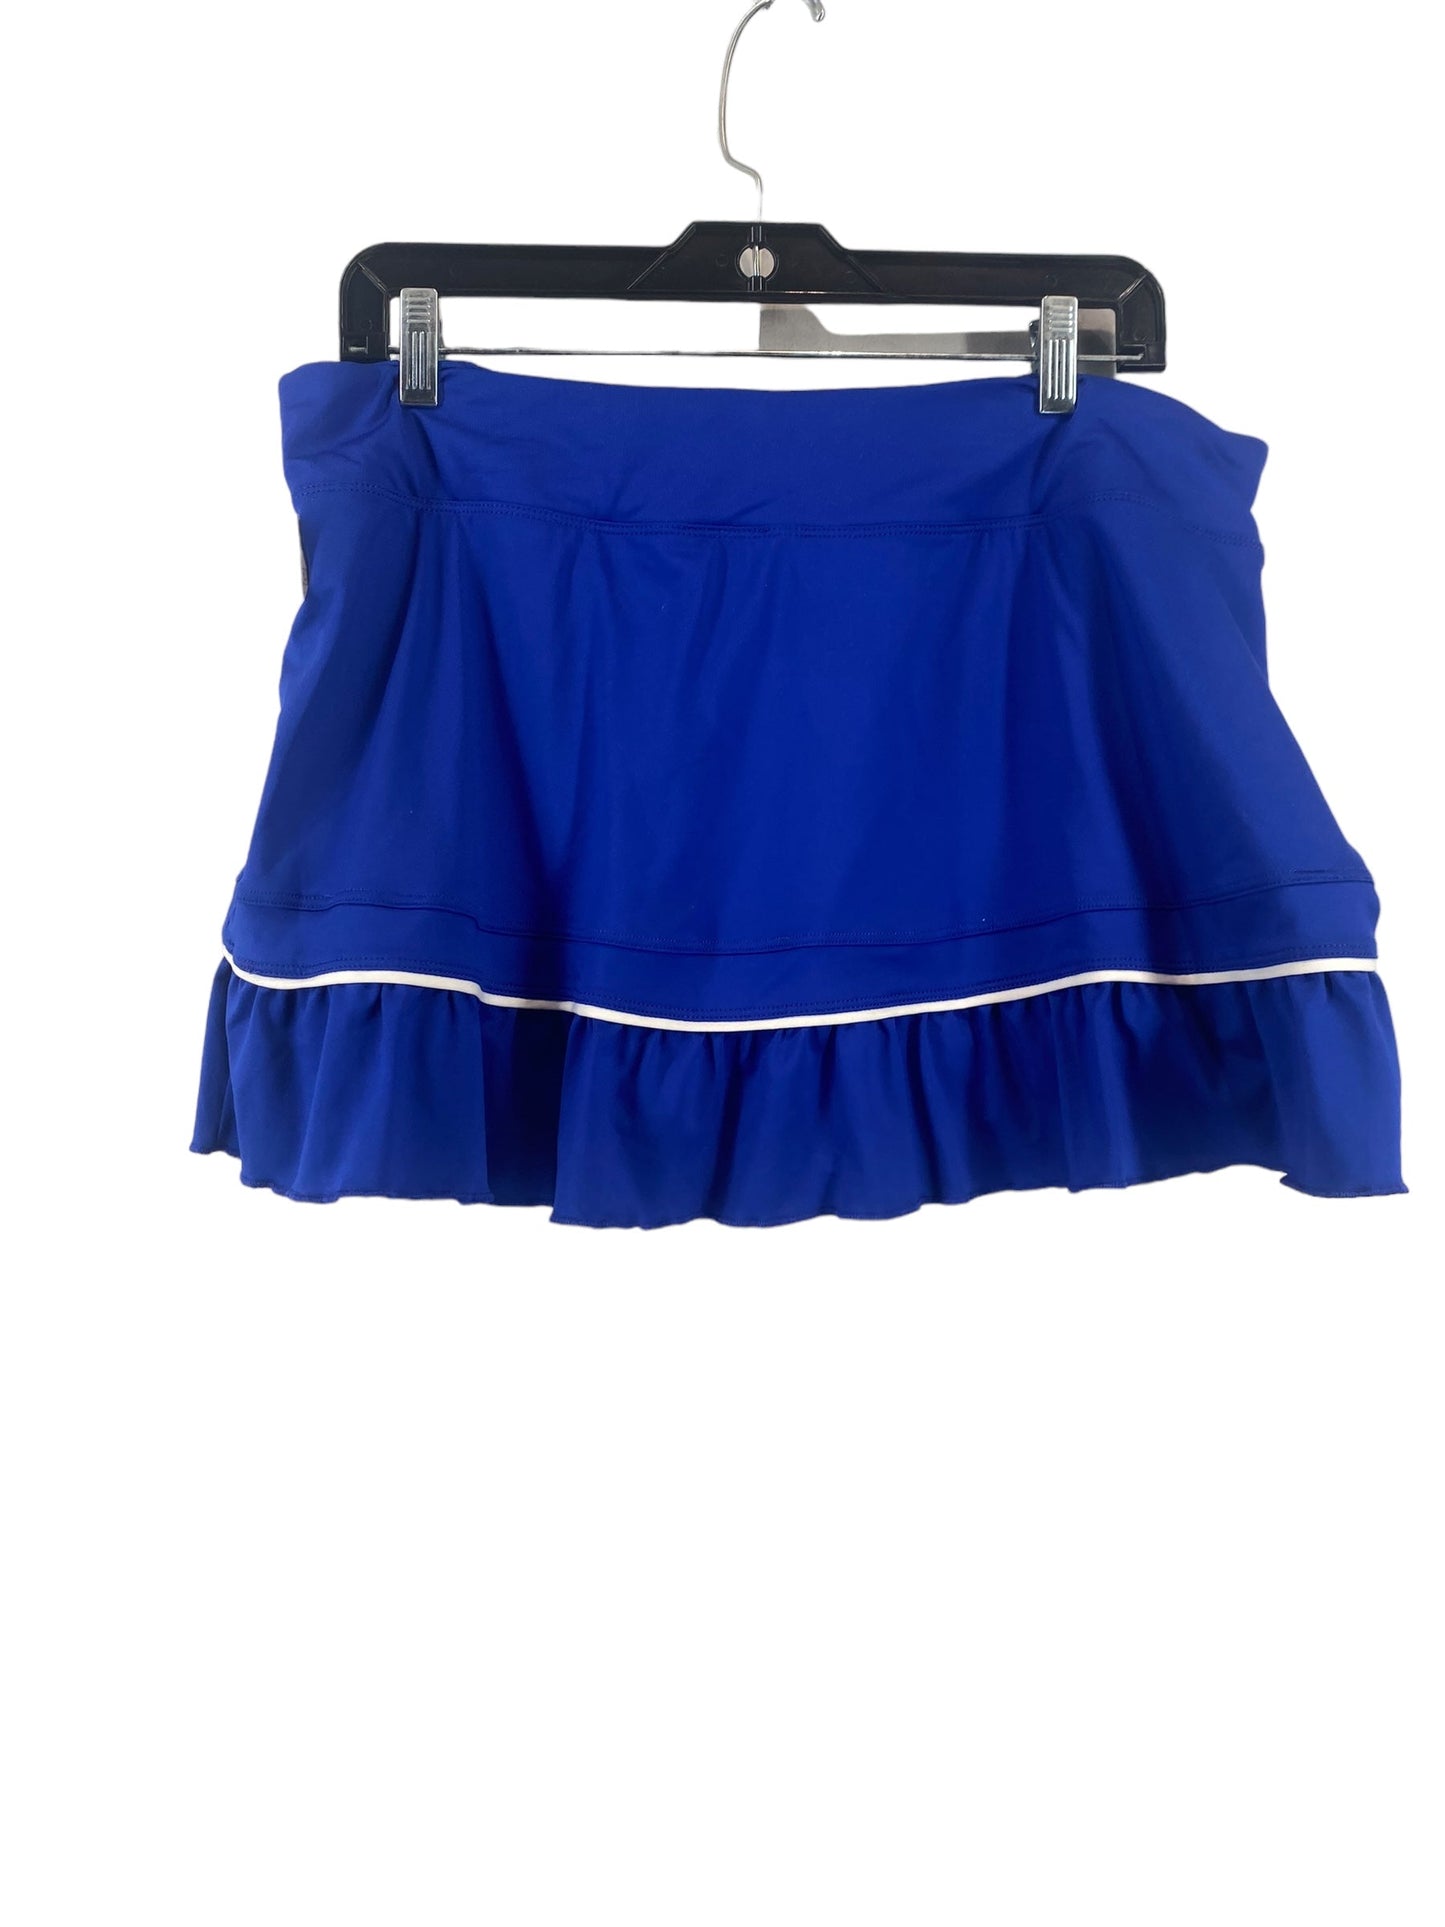 Blue Athletic Skirt Nike, Size Xl